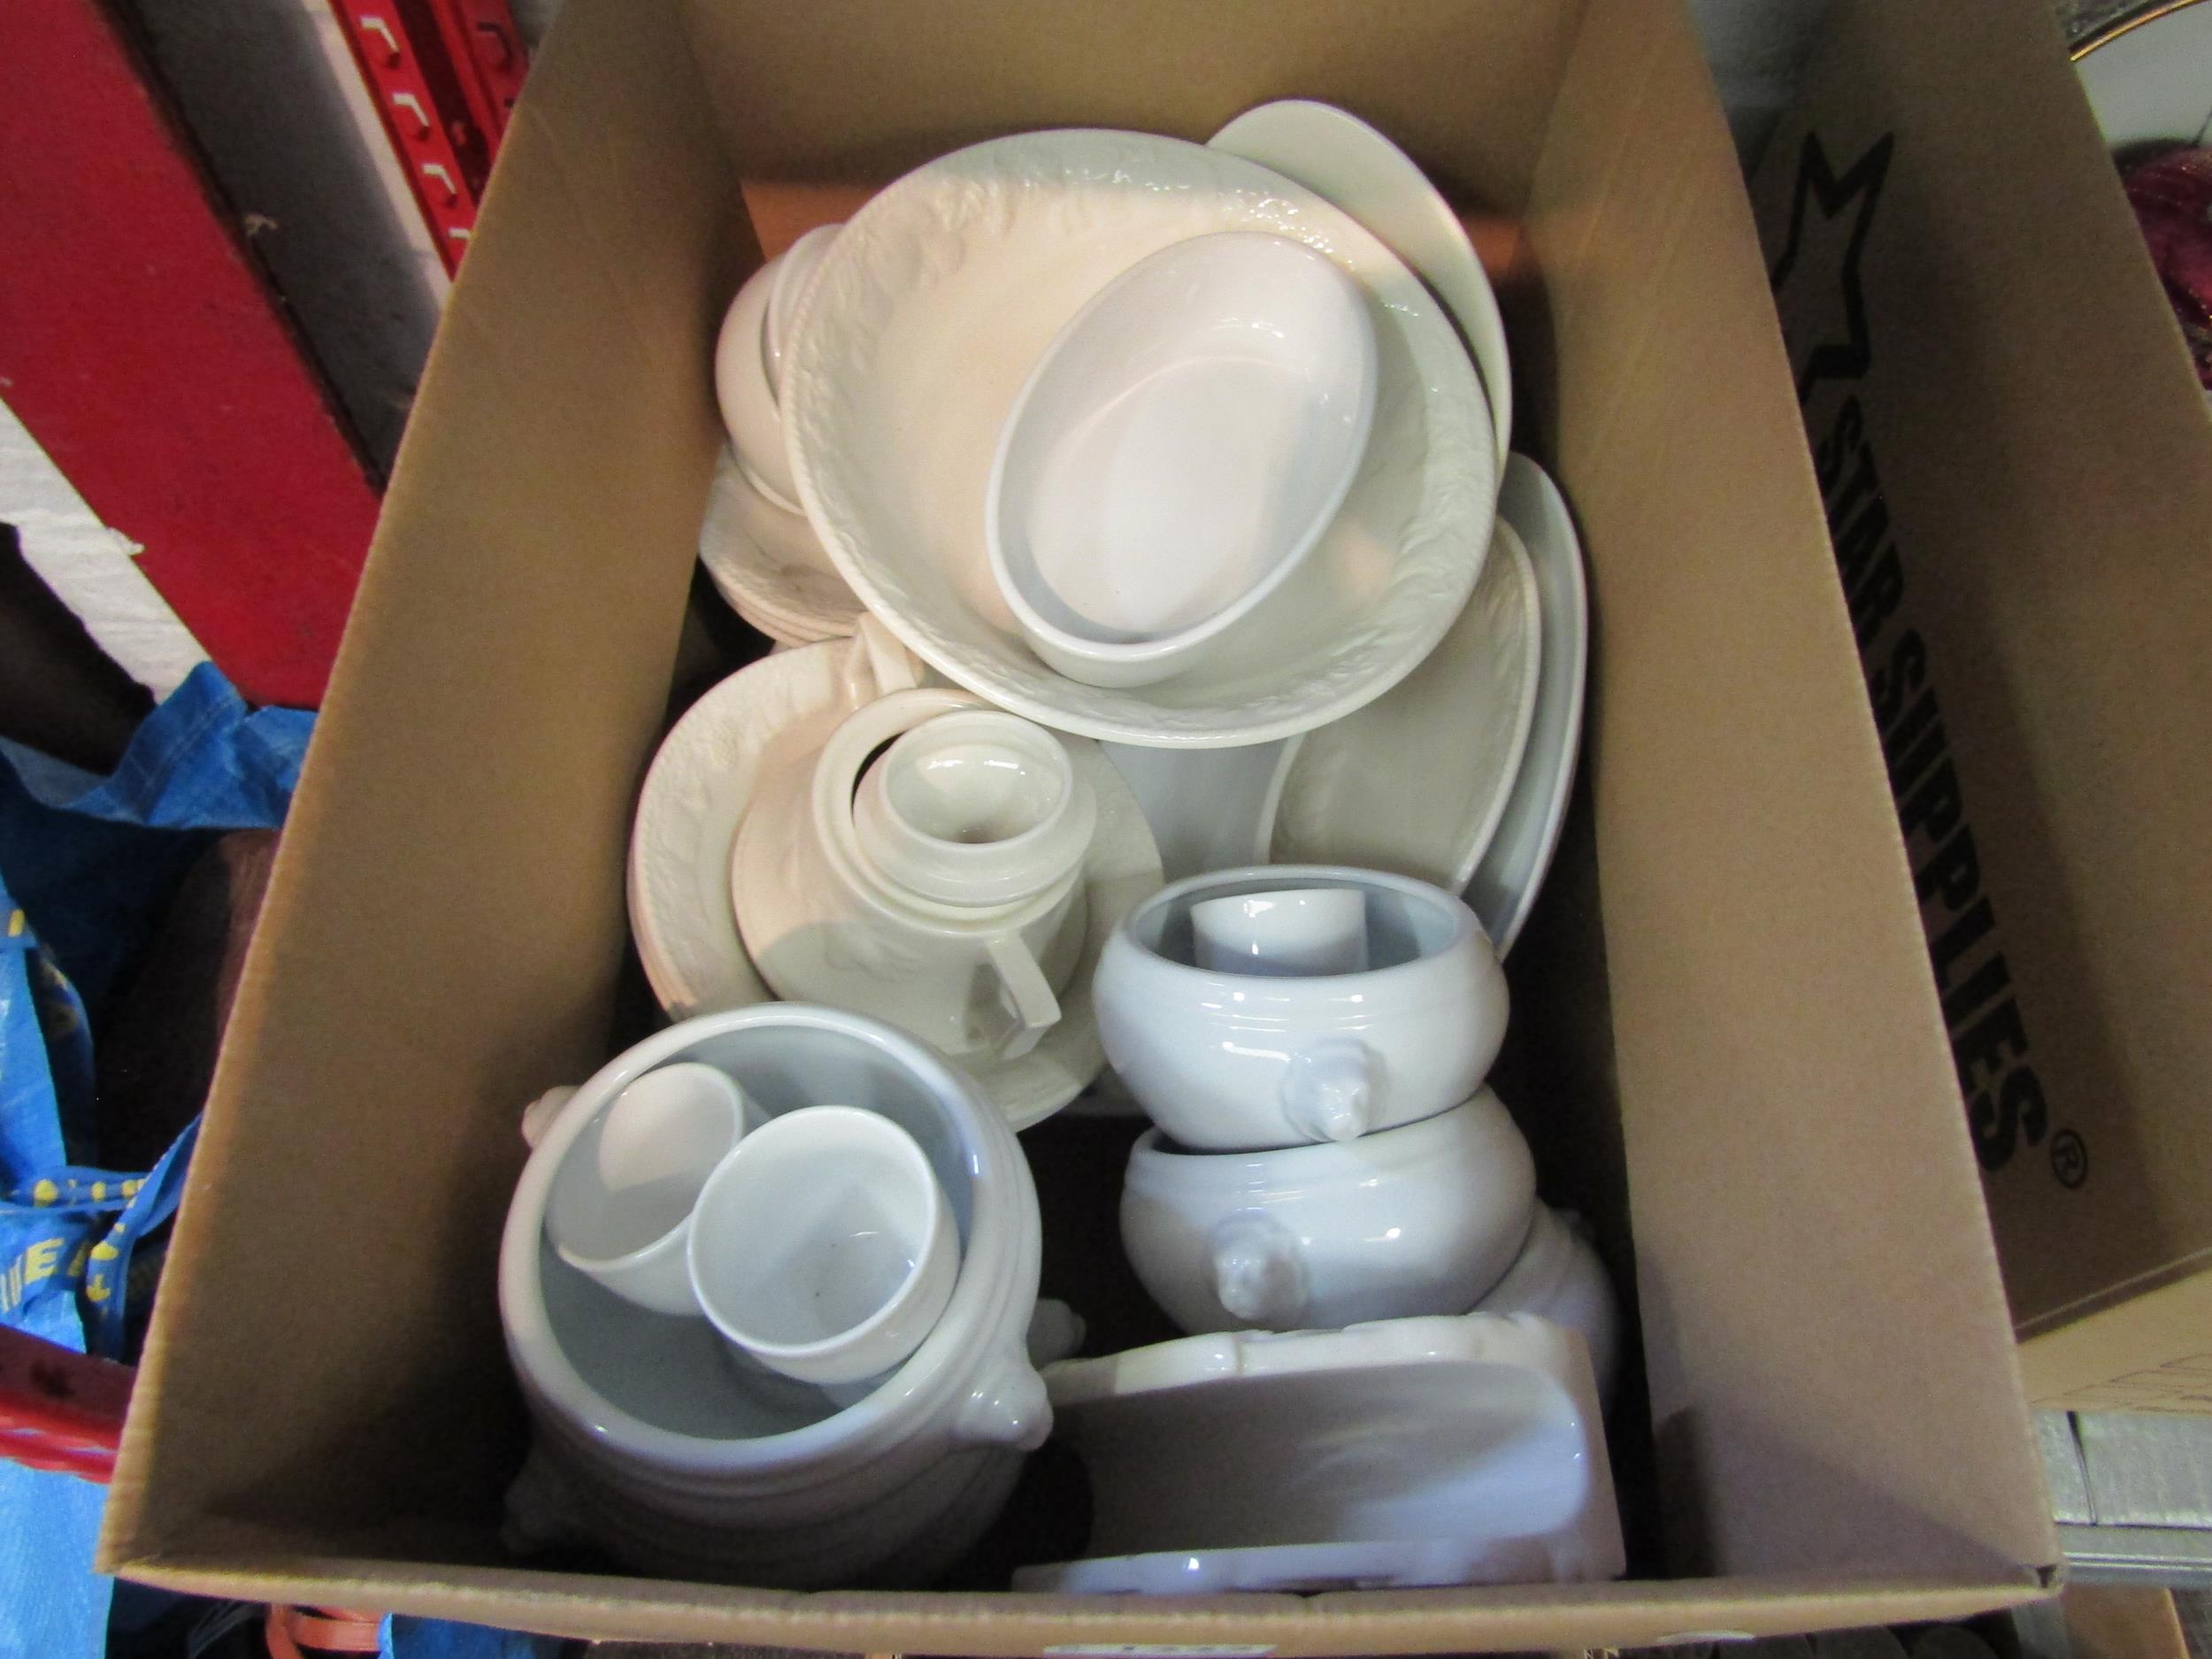 A box of white ceramics including soup dishes, bowls etc